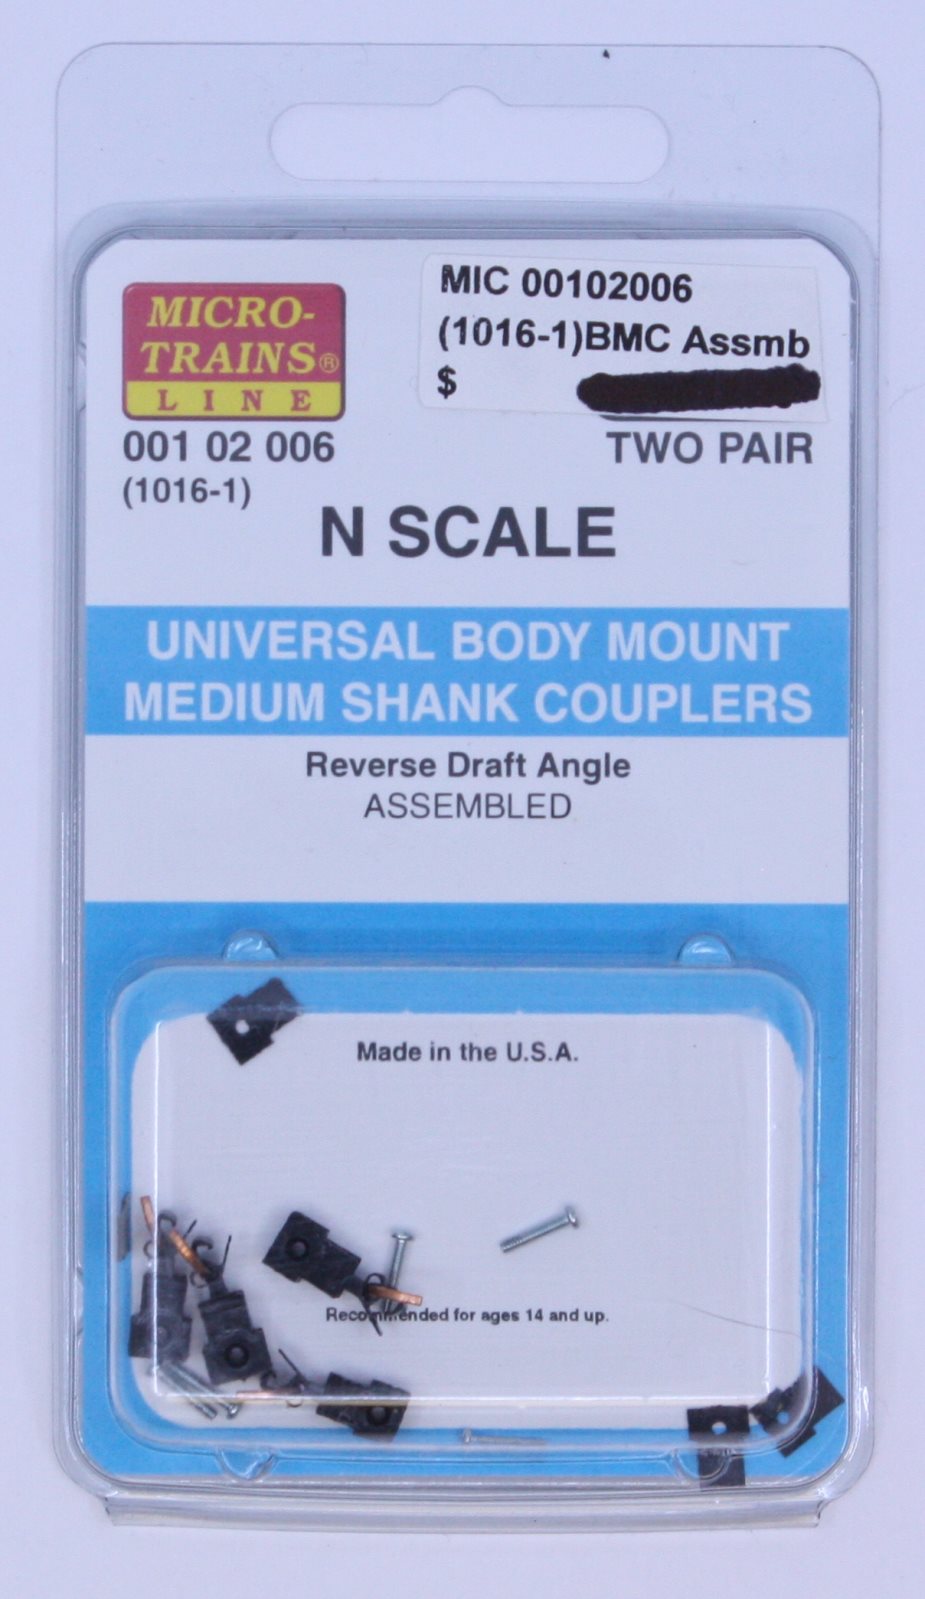 MicroTrains 00102006 (1016-1) N Universal Body Mount Medium Shank Couplers